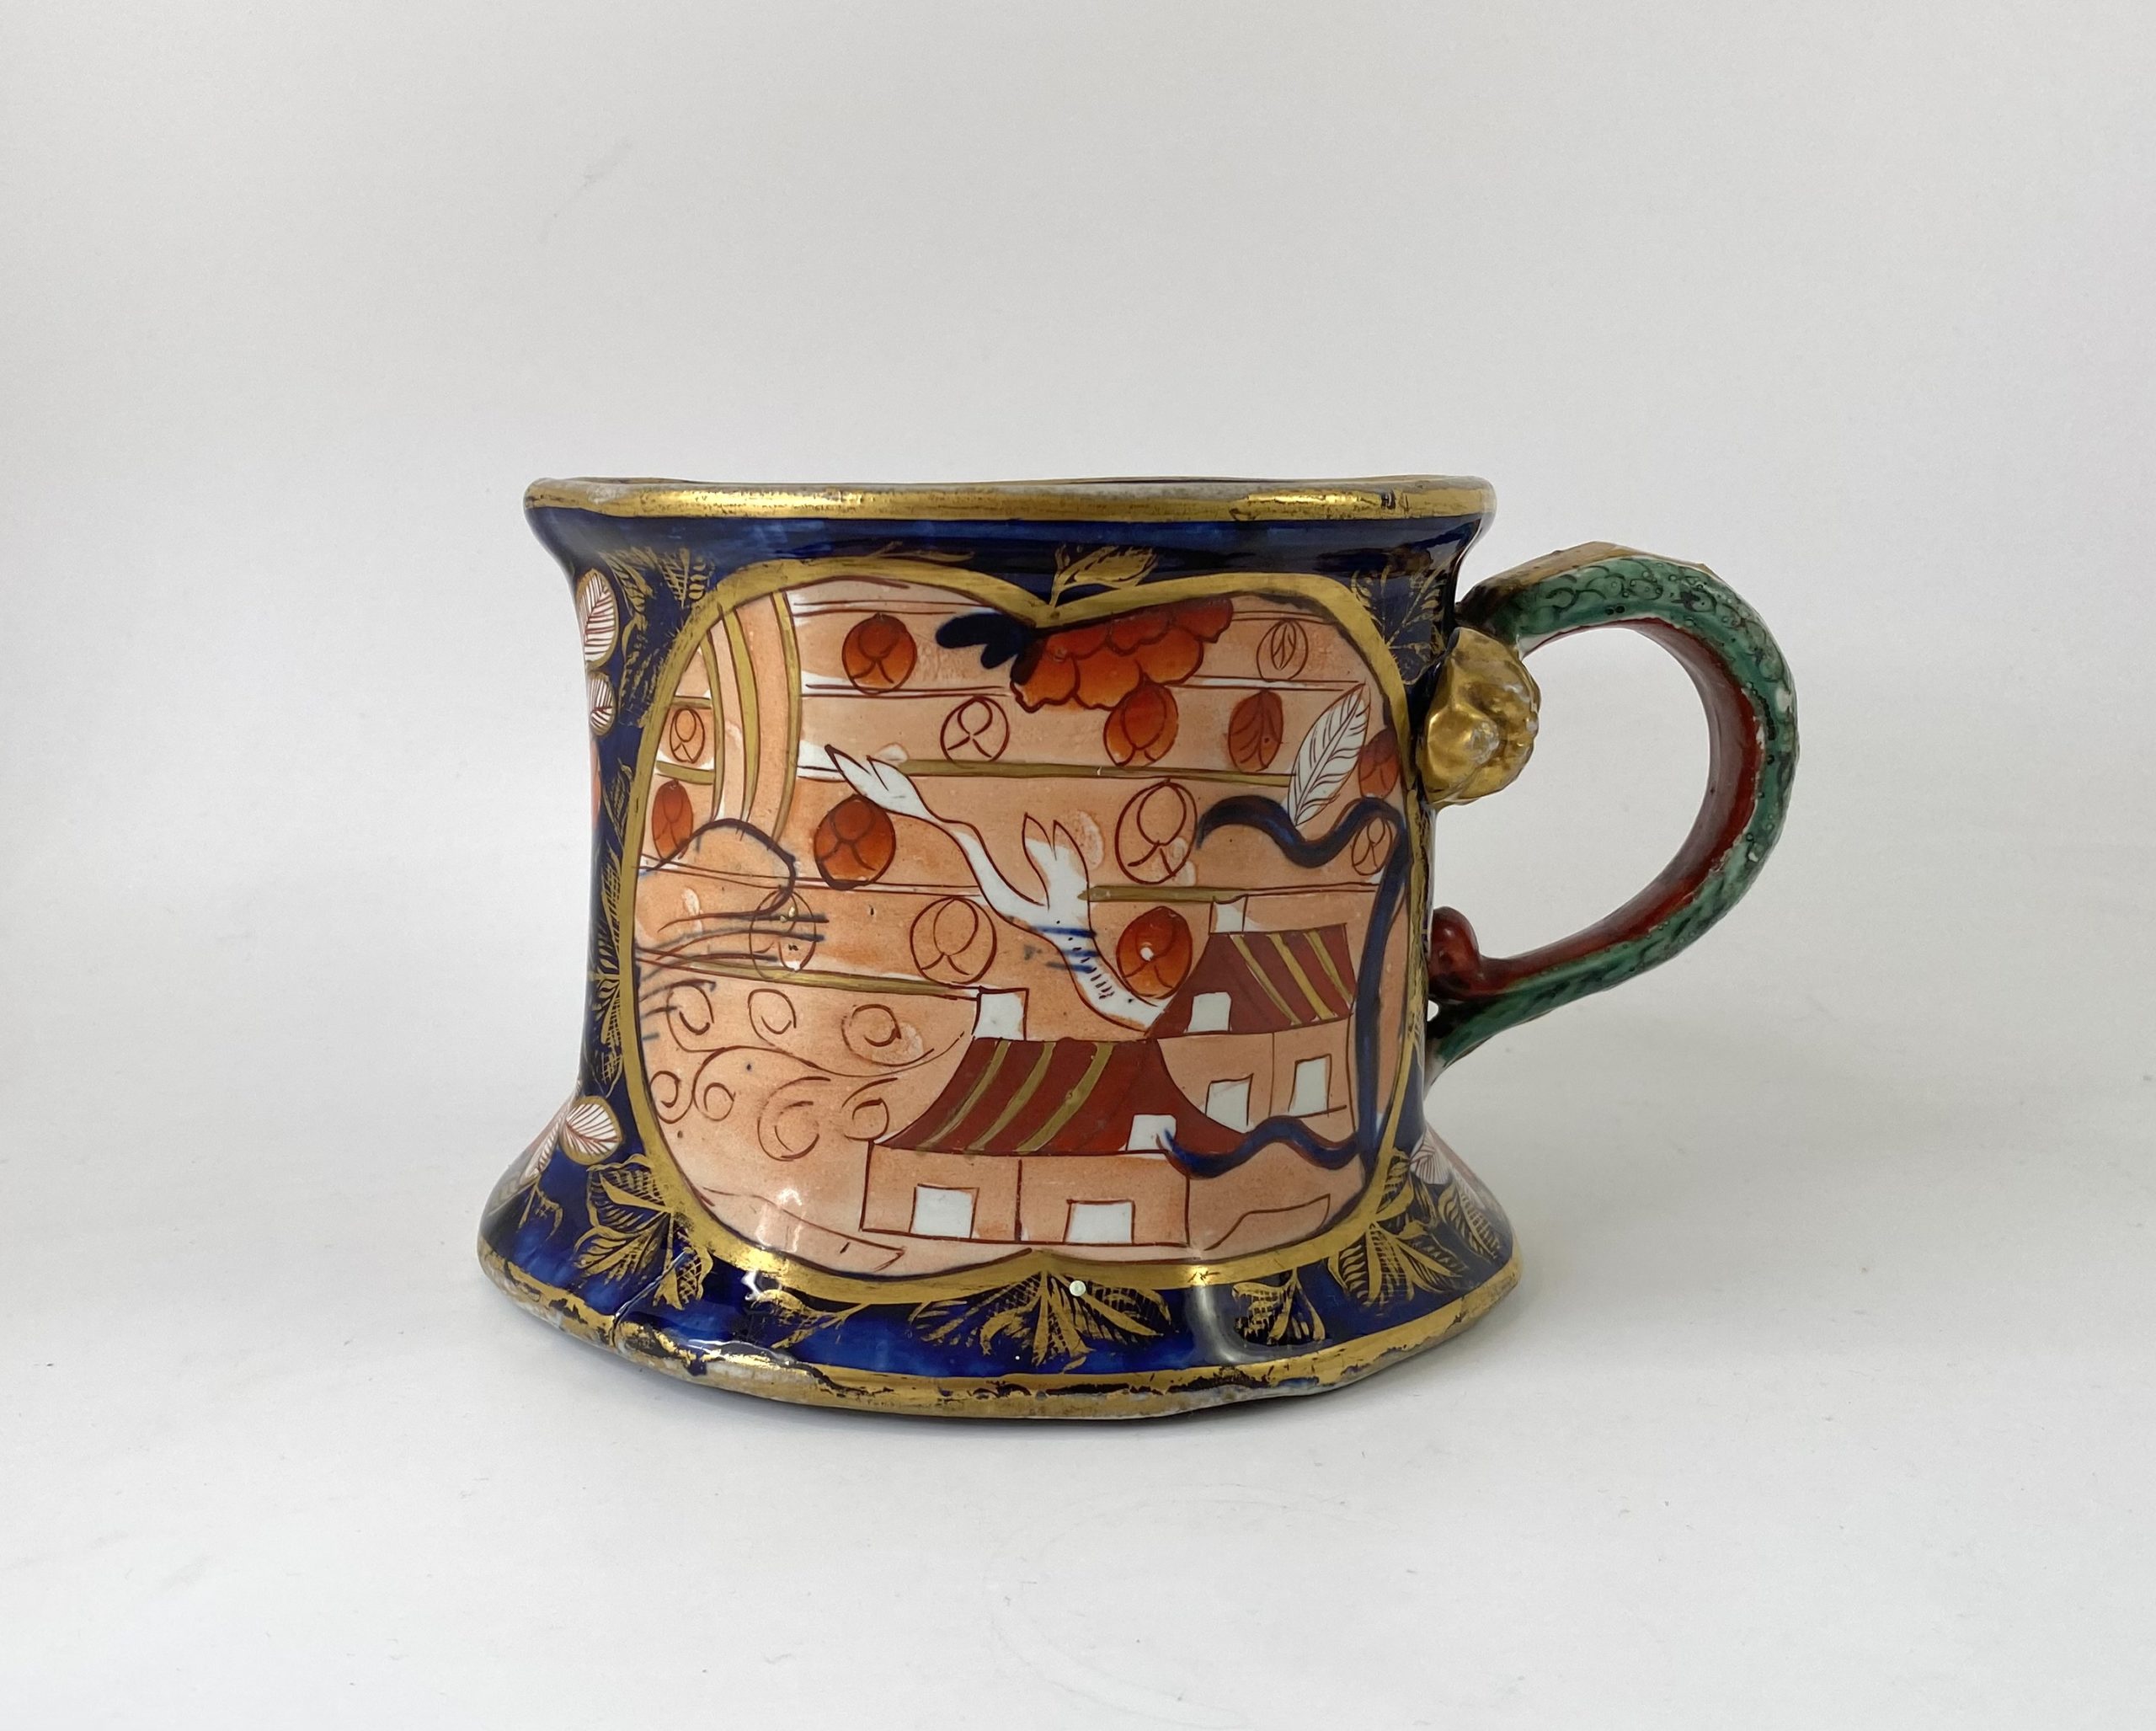 Masons Ironstone Quart mug ‘School House’ pattern, c. 1815.